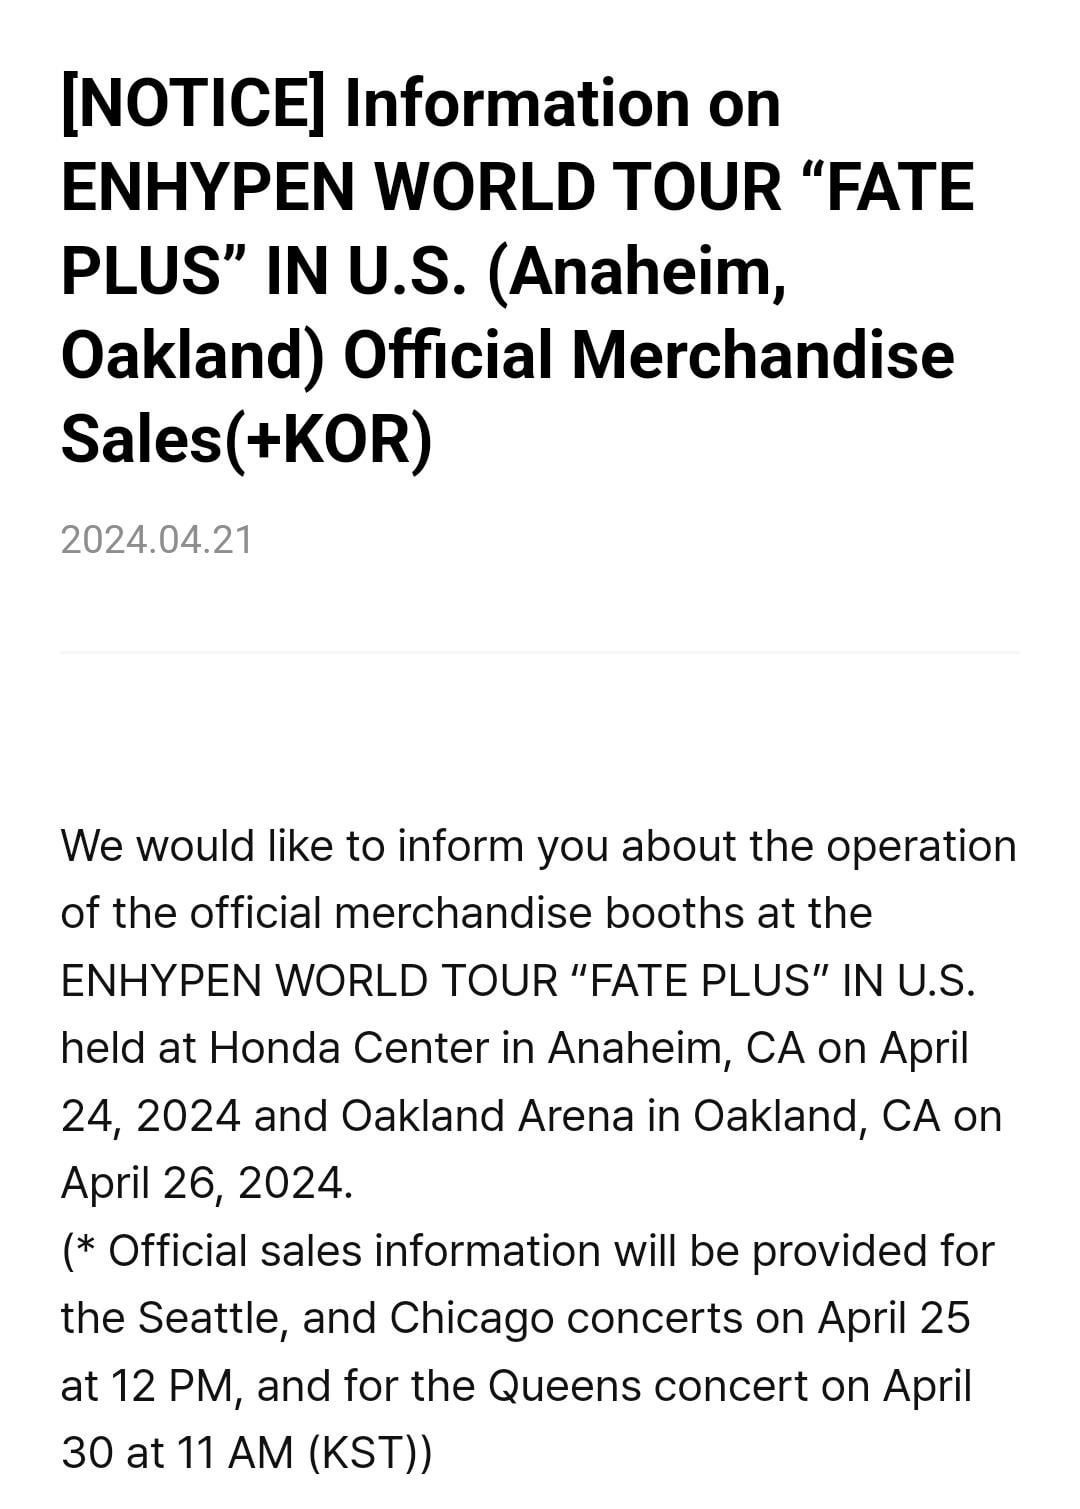 240421 [NOTICE] Information on ENHYPEN WORLD TOUR “FATE PLUS” IN U.S. (Anaheim, Oakland) Official Merchandise Sales